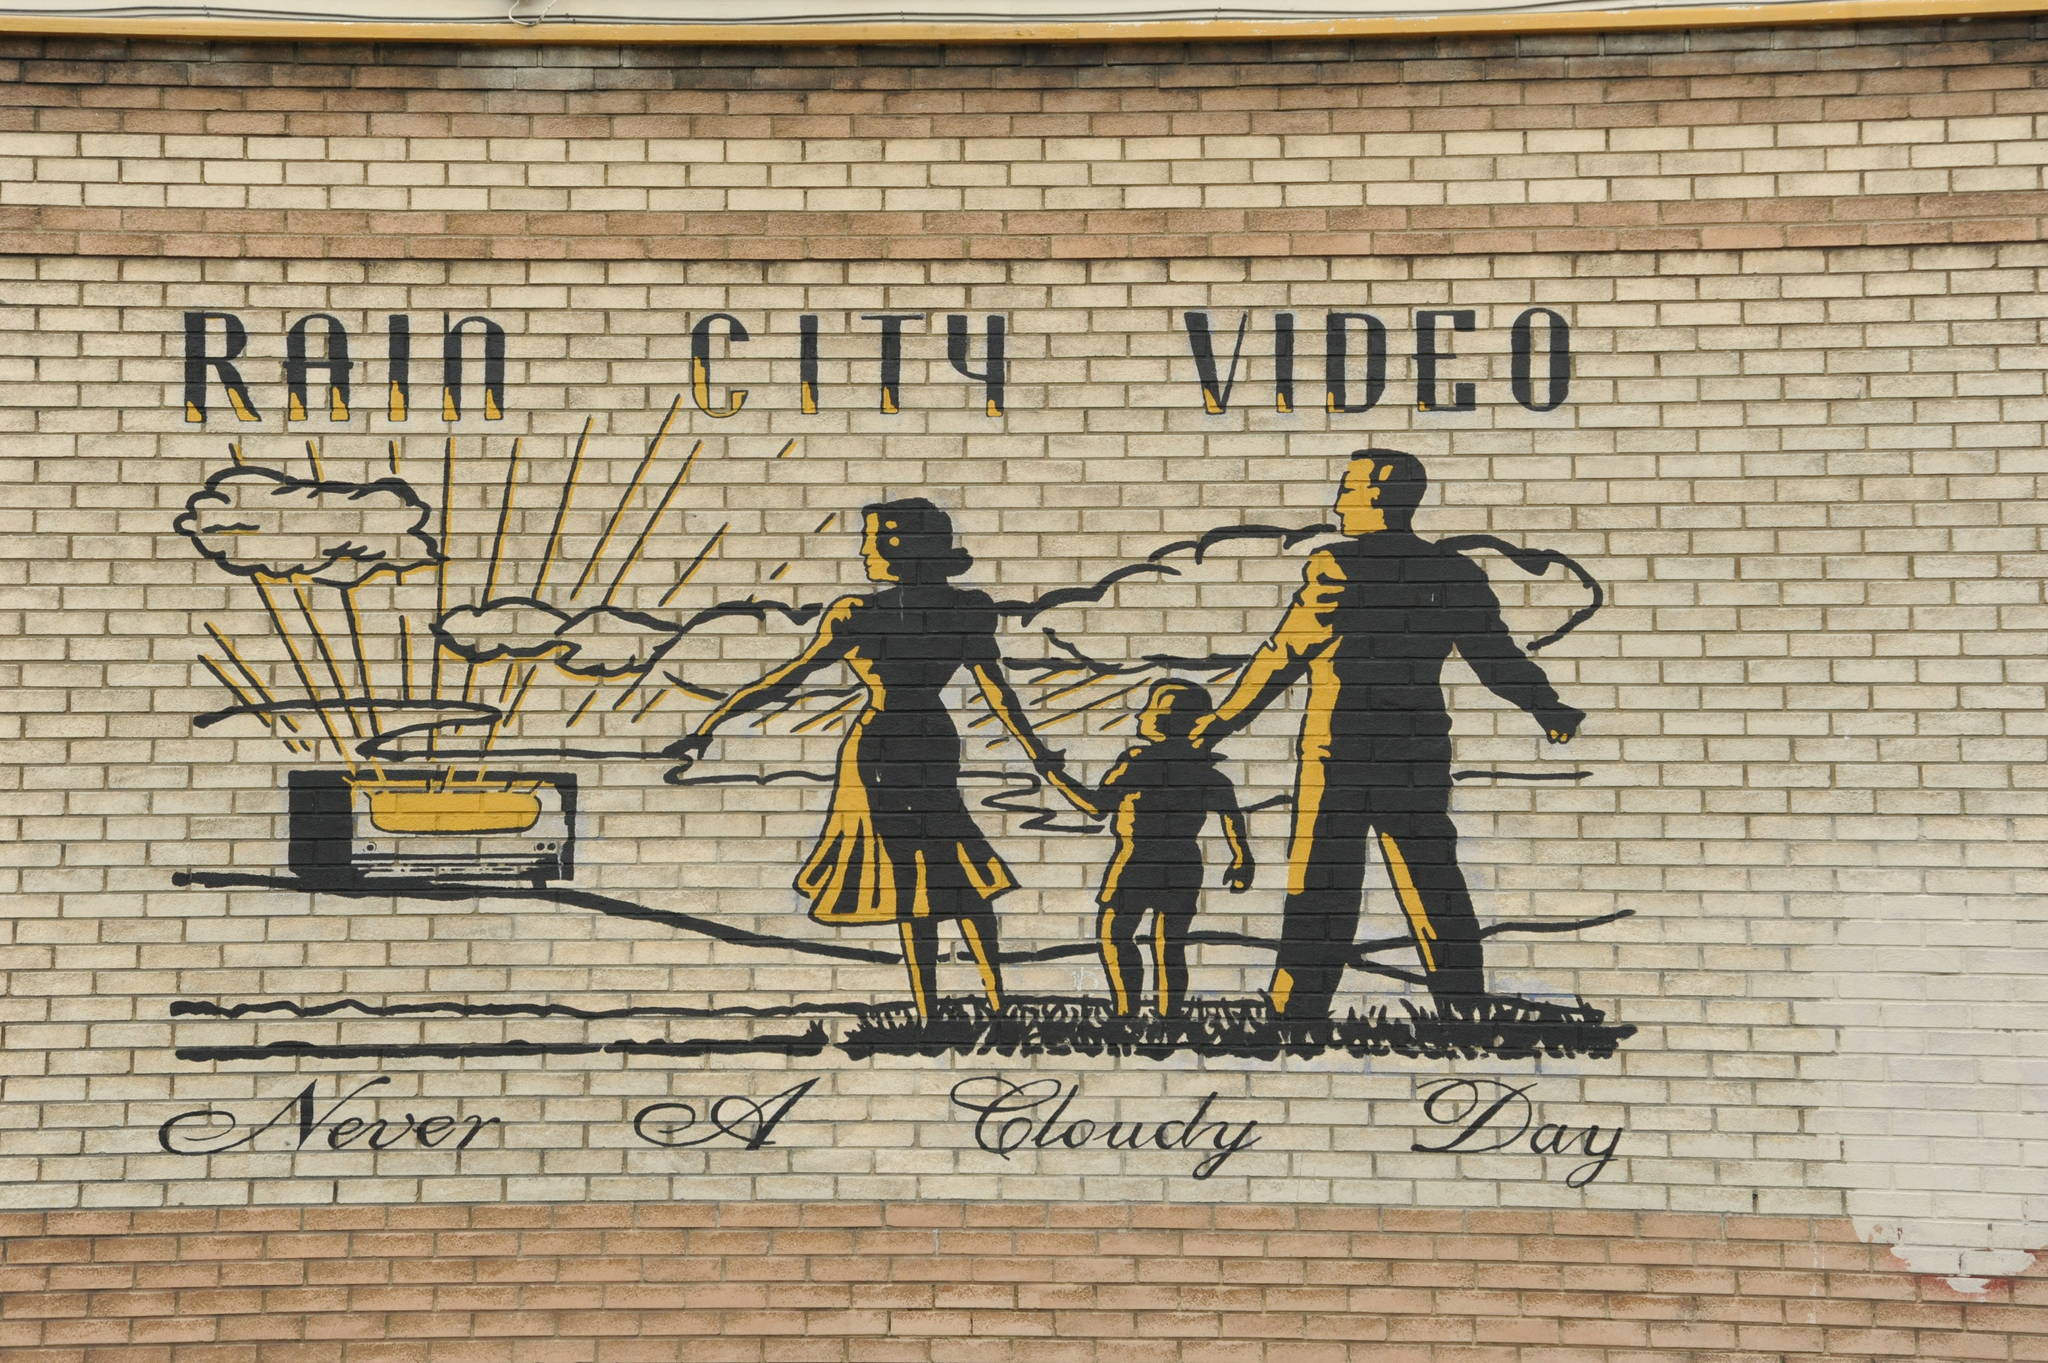 Rain City Video is brick-and-mortar no more. Photo by Wonderlane/Flickr